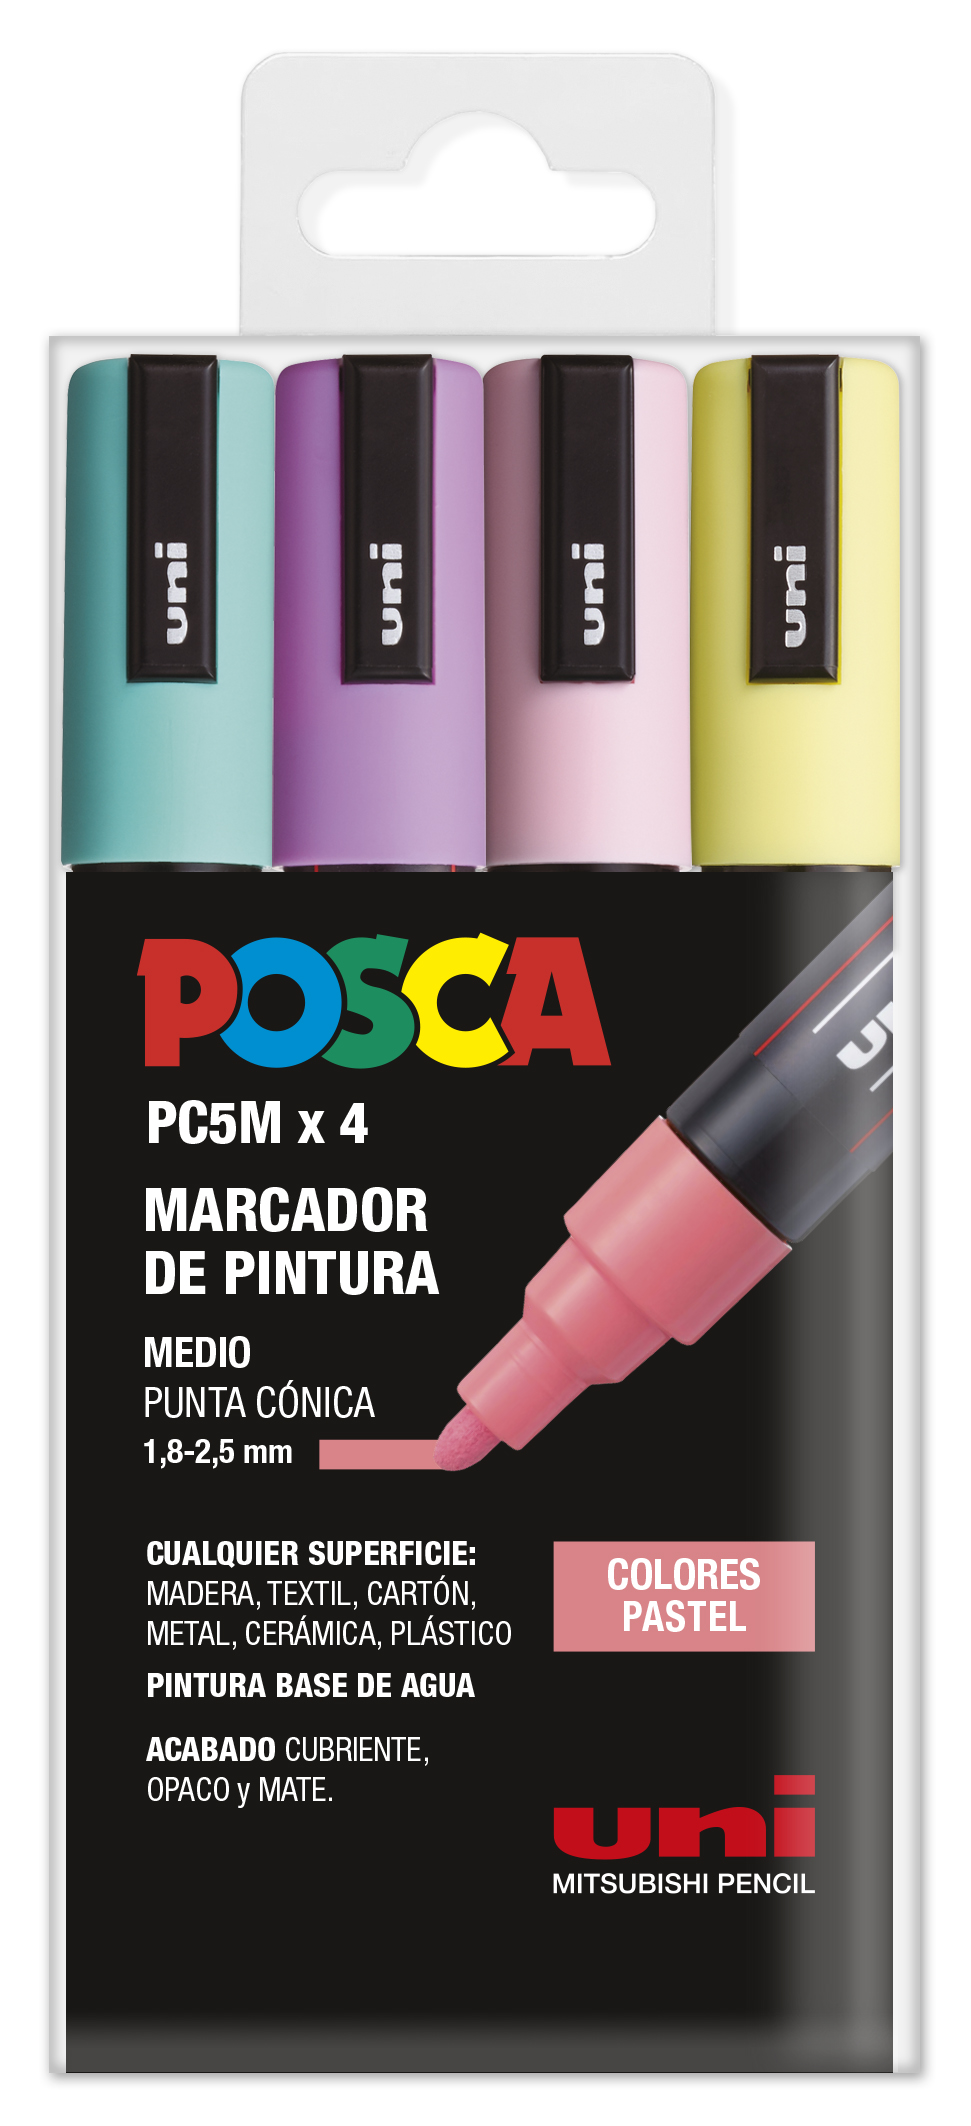 POSCA PC-5M acrílicos. Punta media 1,8-2,5 mm